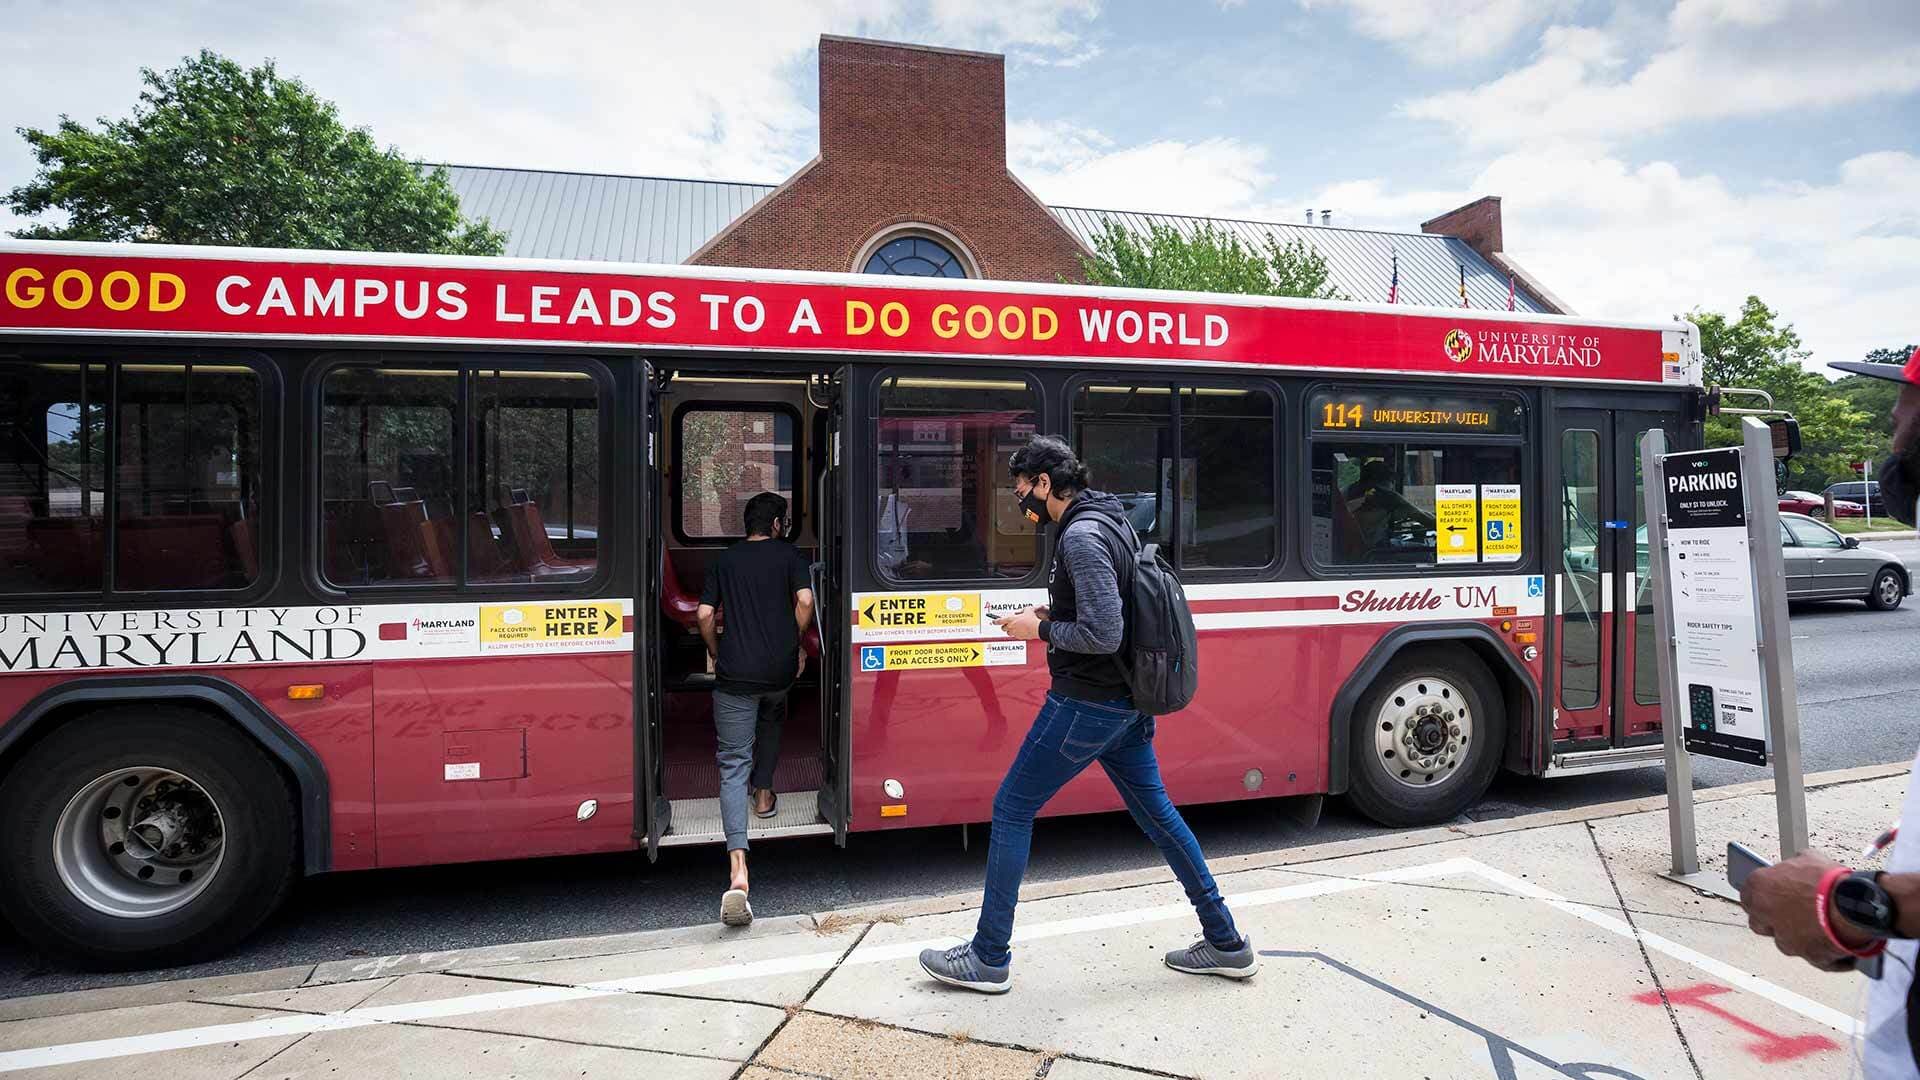 Students board a Shuttle-UM bus